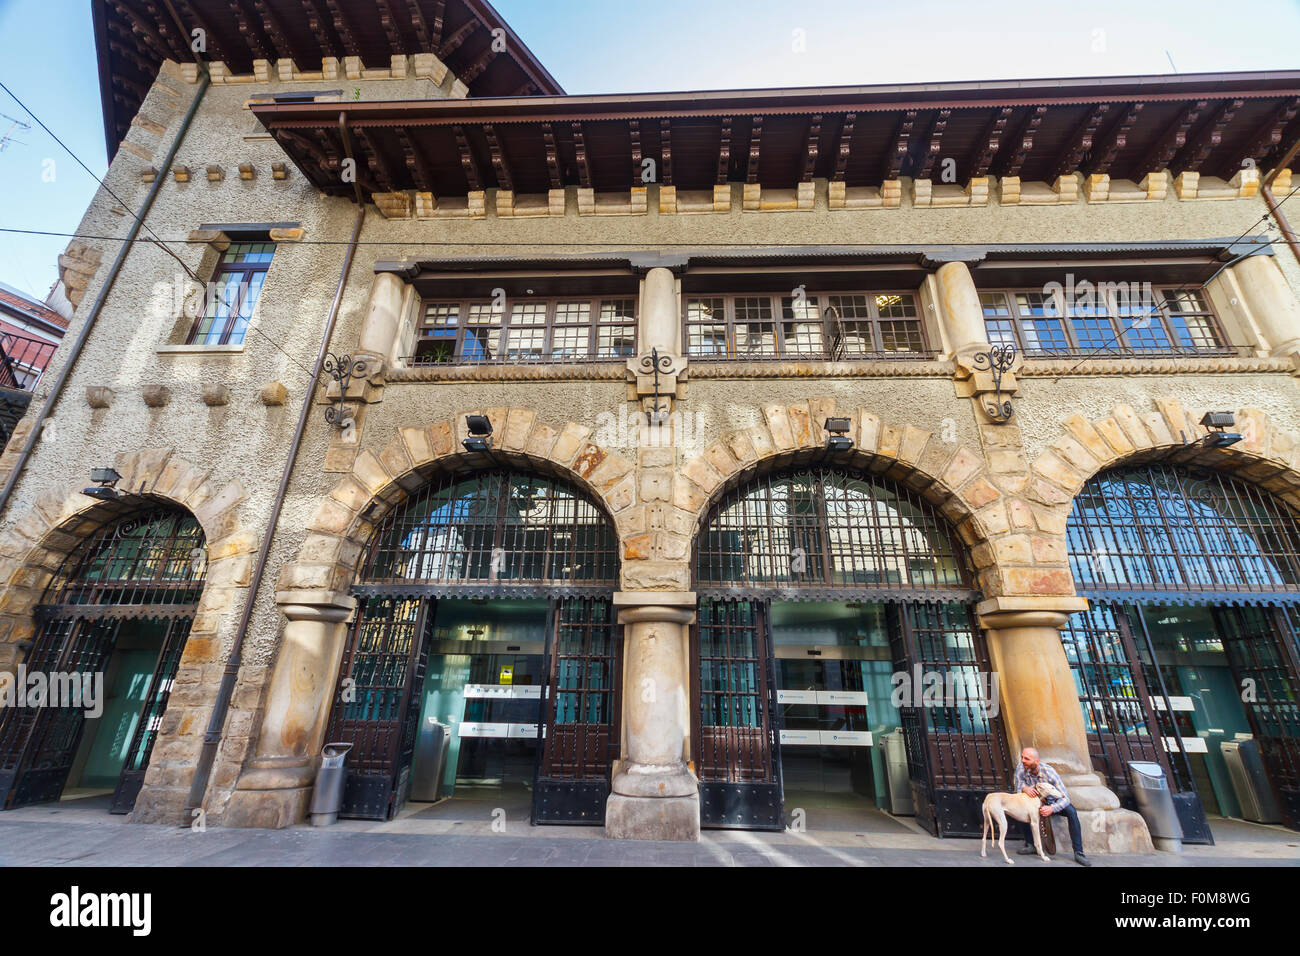 La gare de Atxuri. Bilbao, Biscaye, Espagne, Europe. Banque D'Images